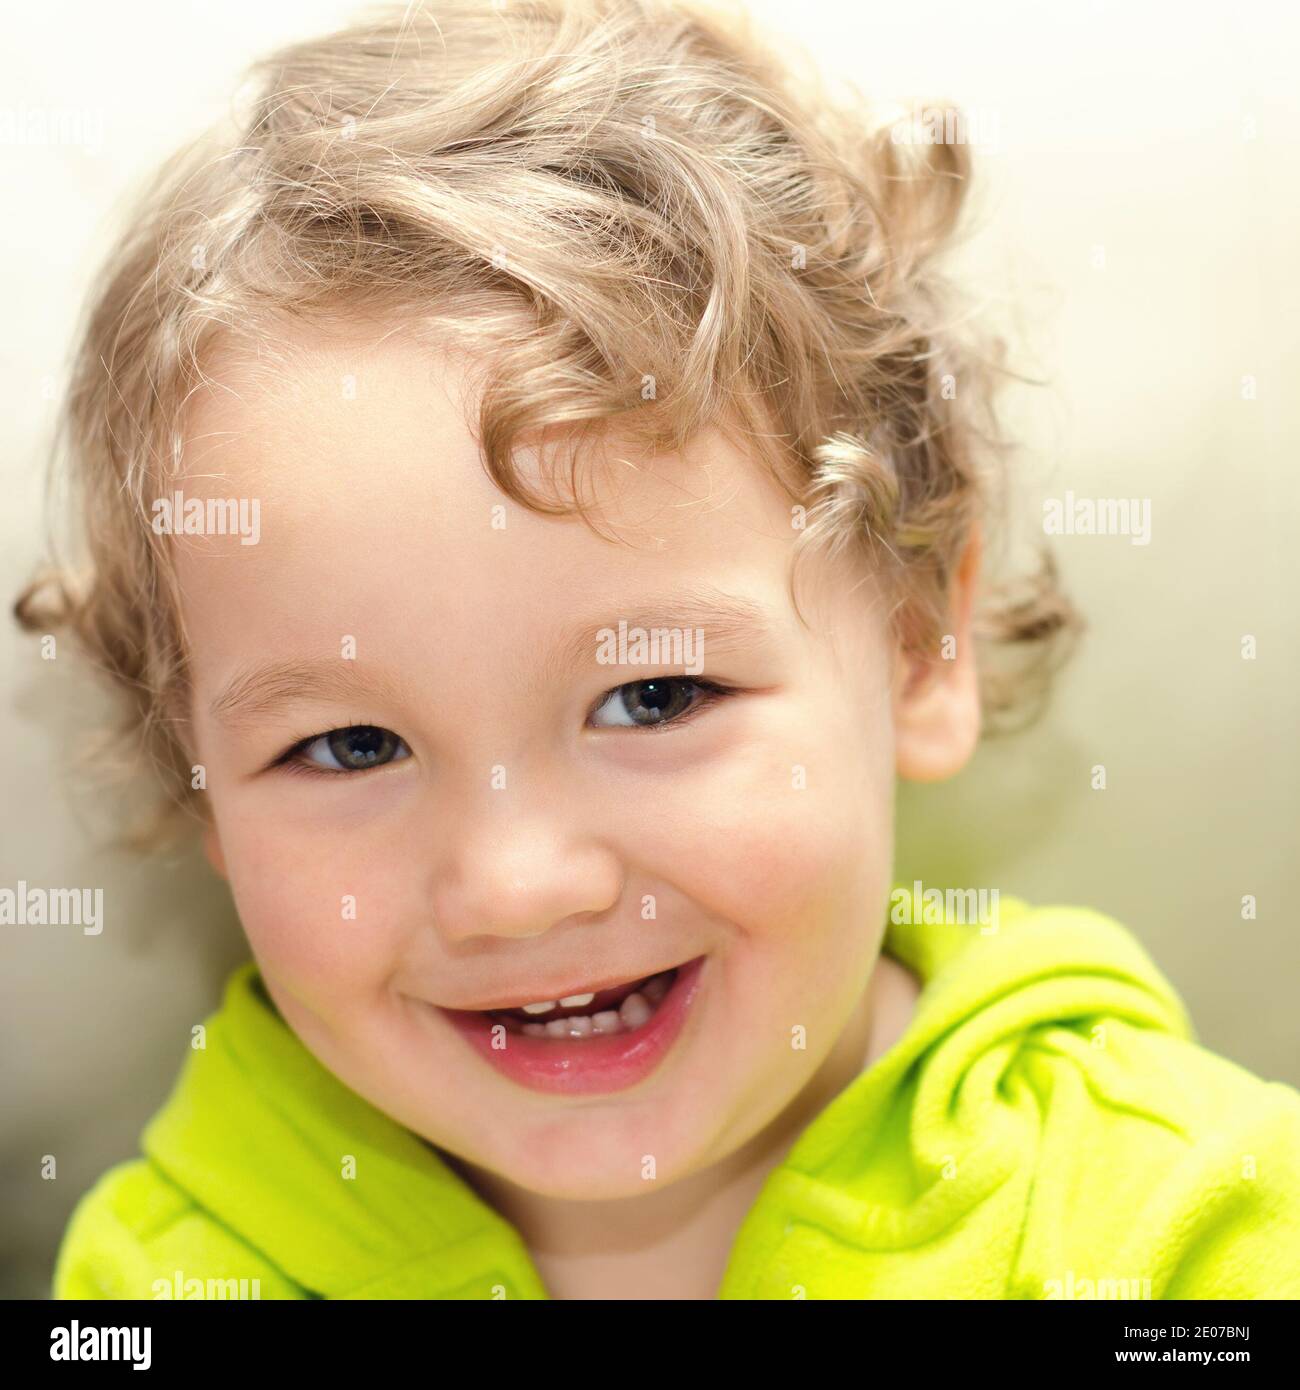 Closeup Smiling Toddler Face Hi Res Stock Photography And Images Alamy